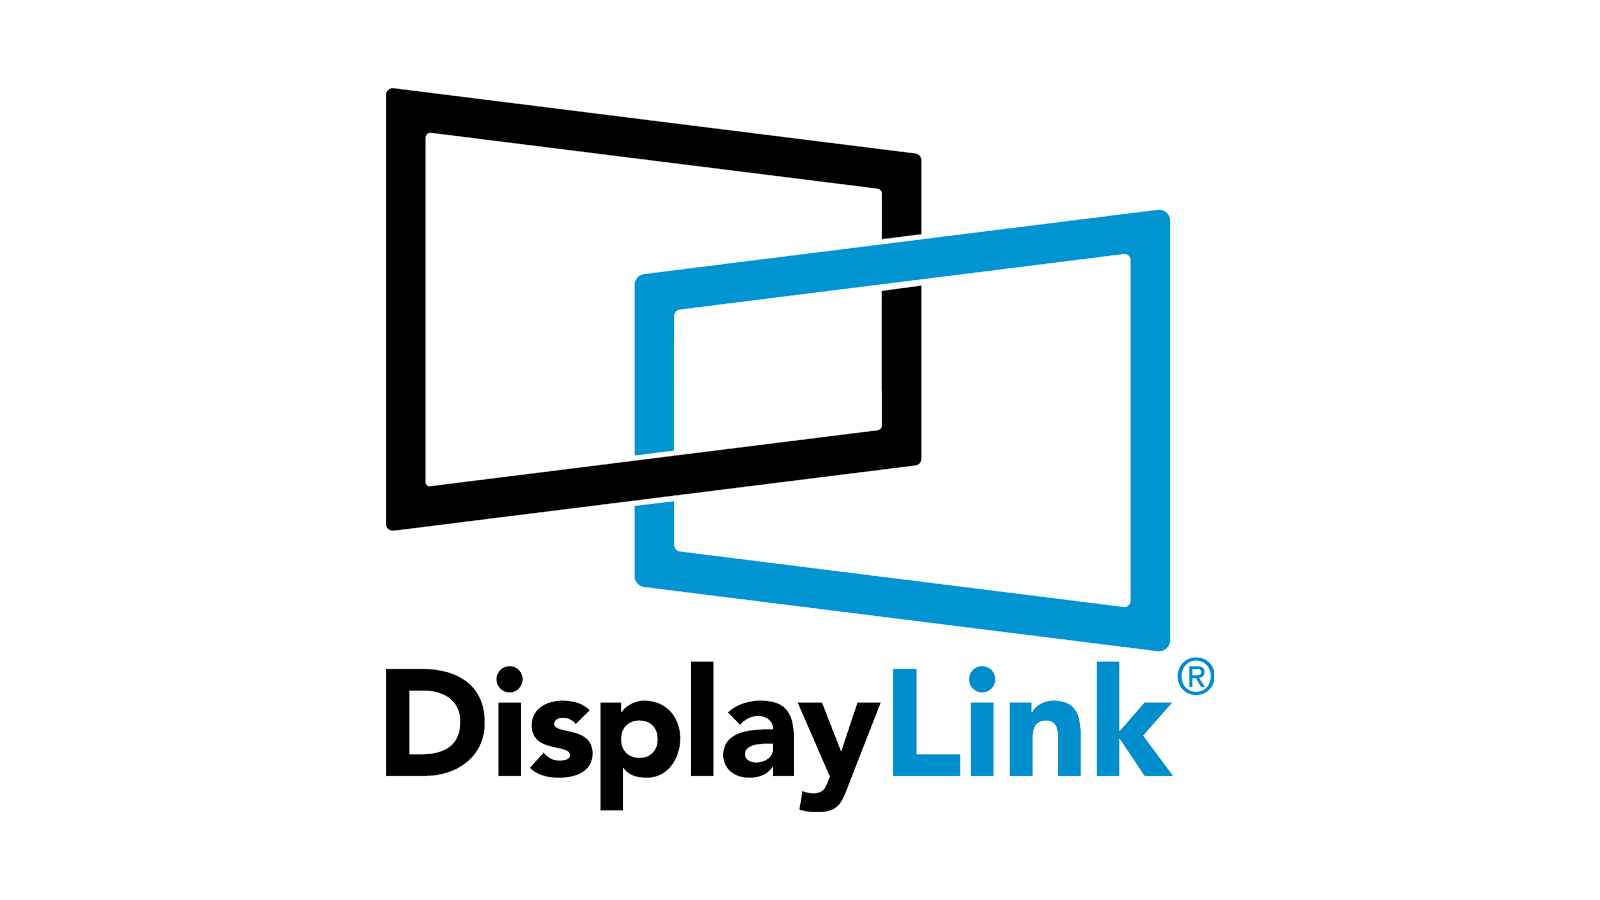 The DisplayLink Logo